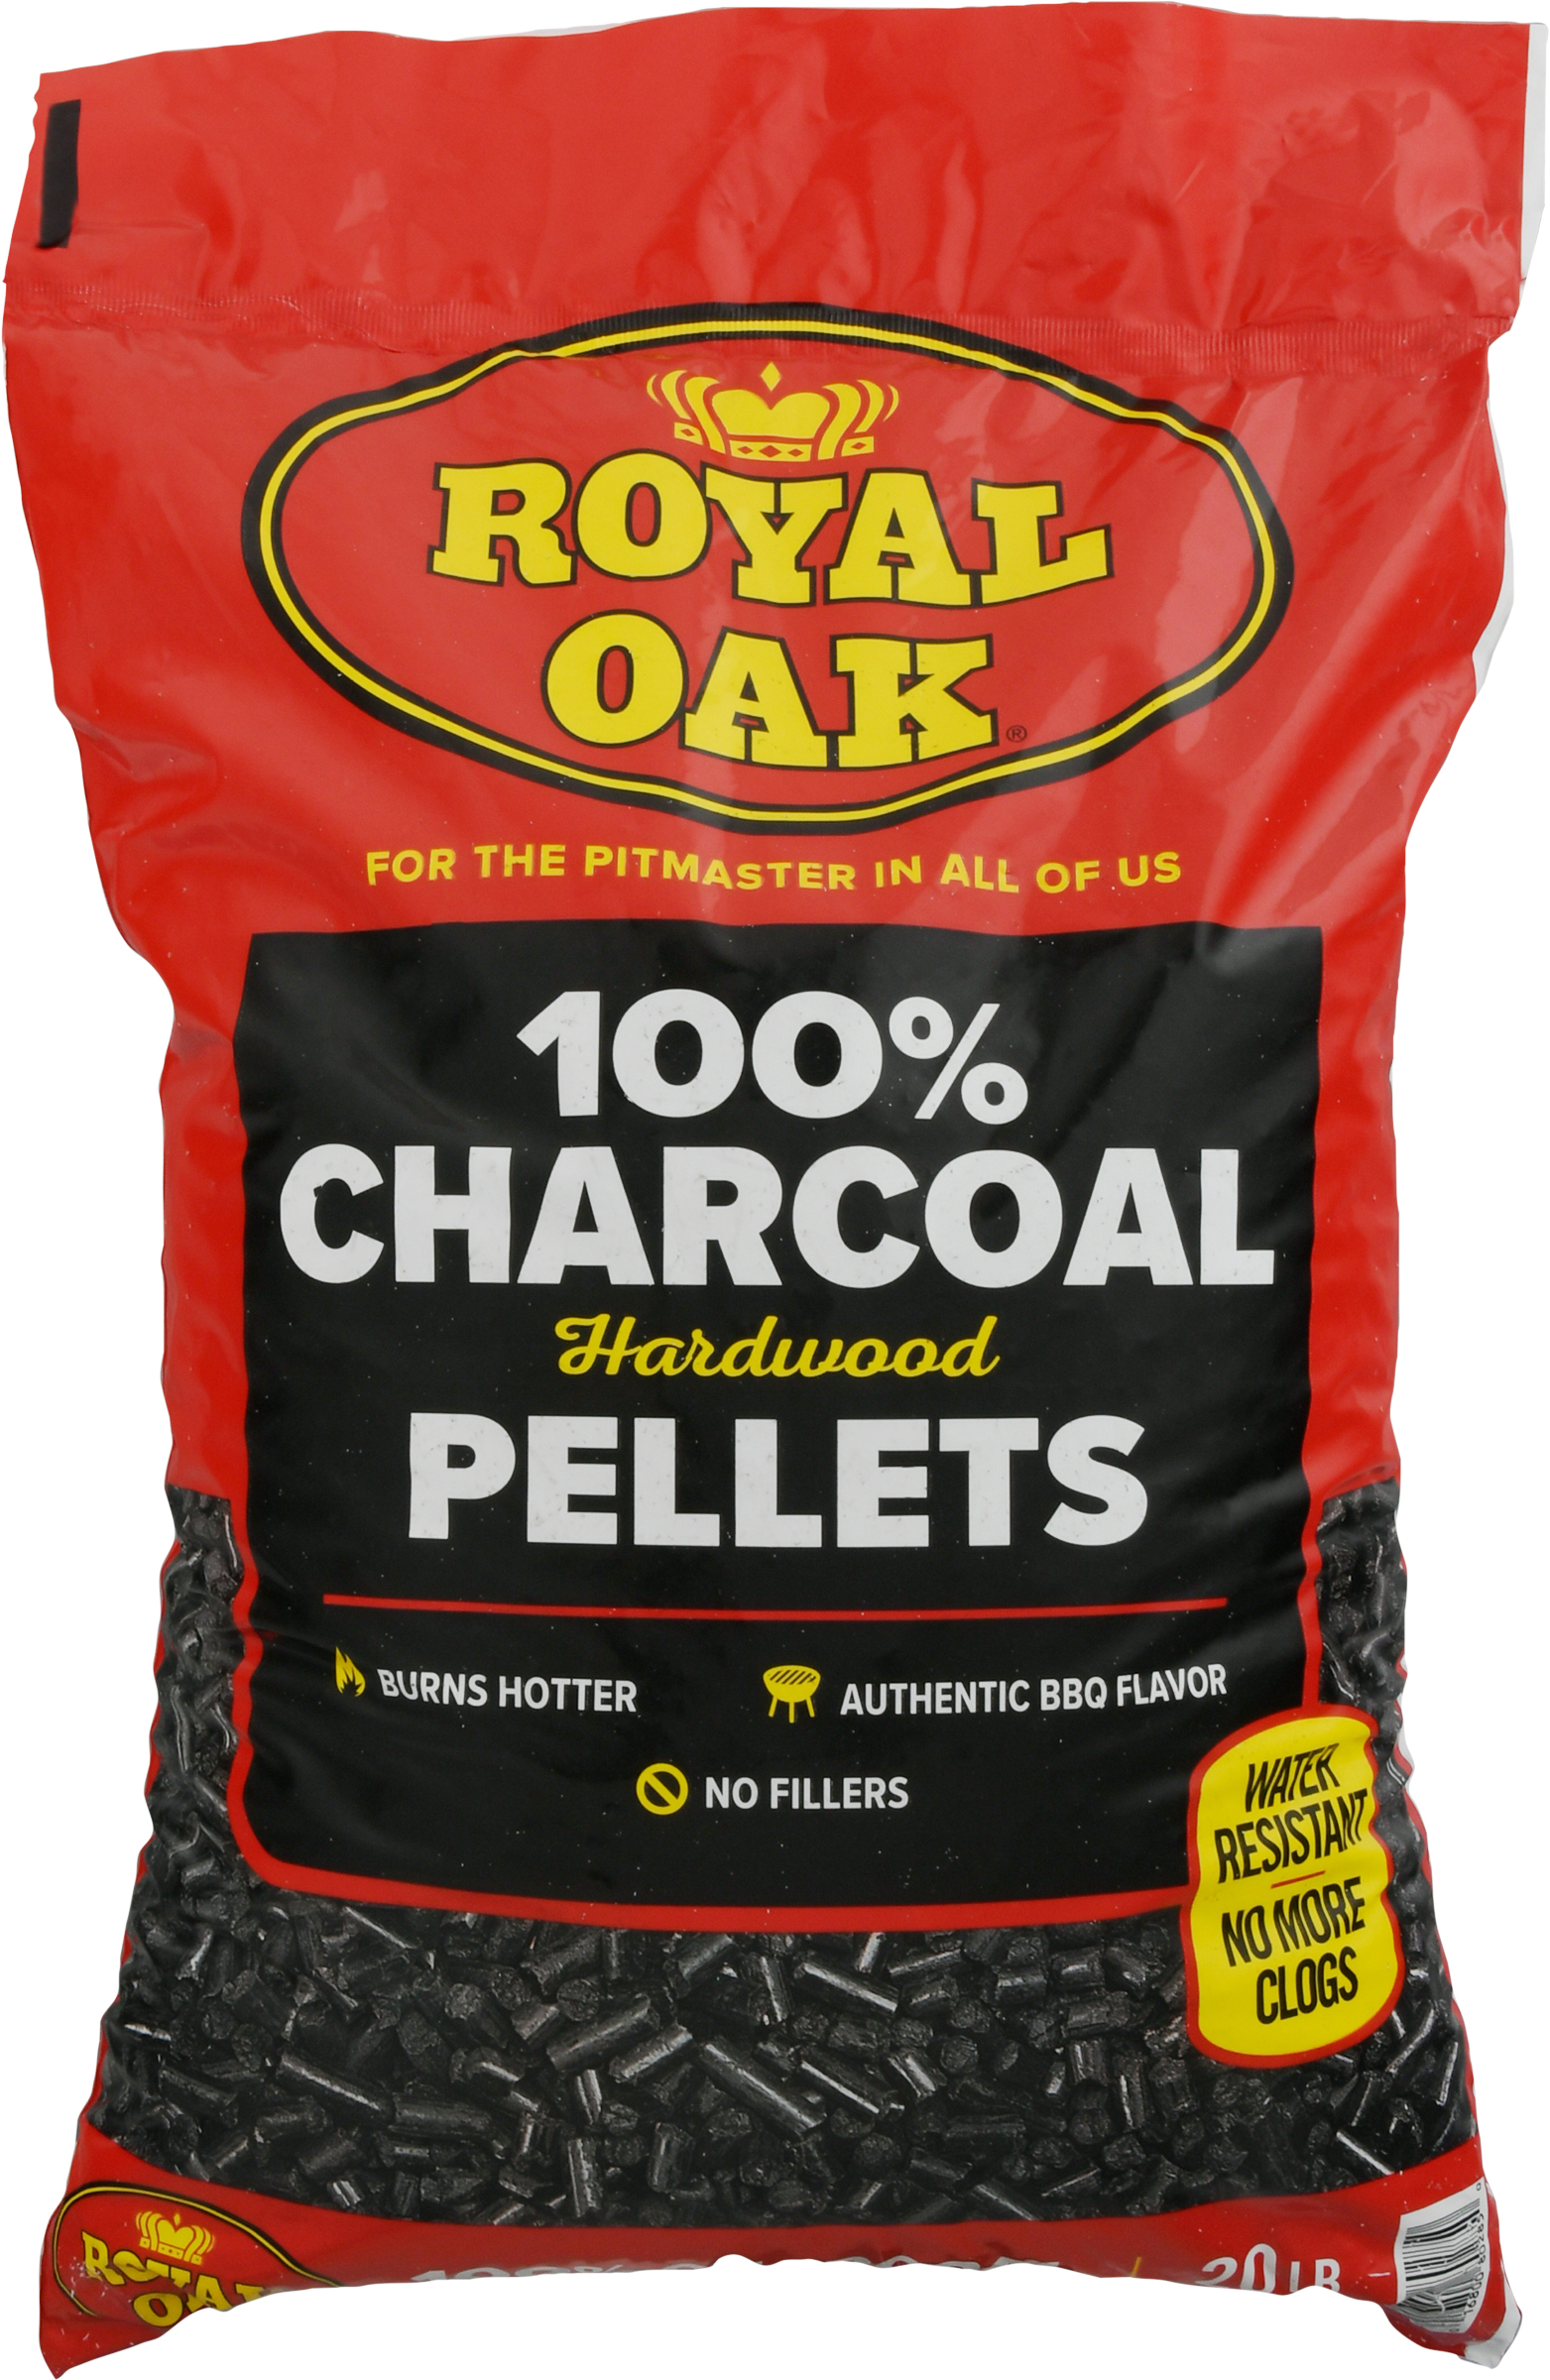 Royal Oak 100% Hardwood Charcoal Pellets, 20 Pounds - image 1 of 3